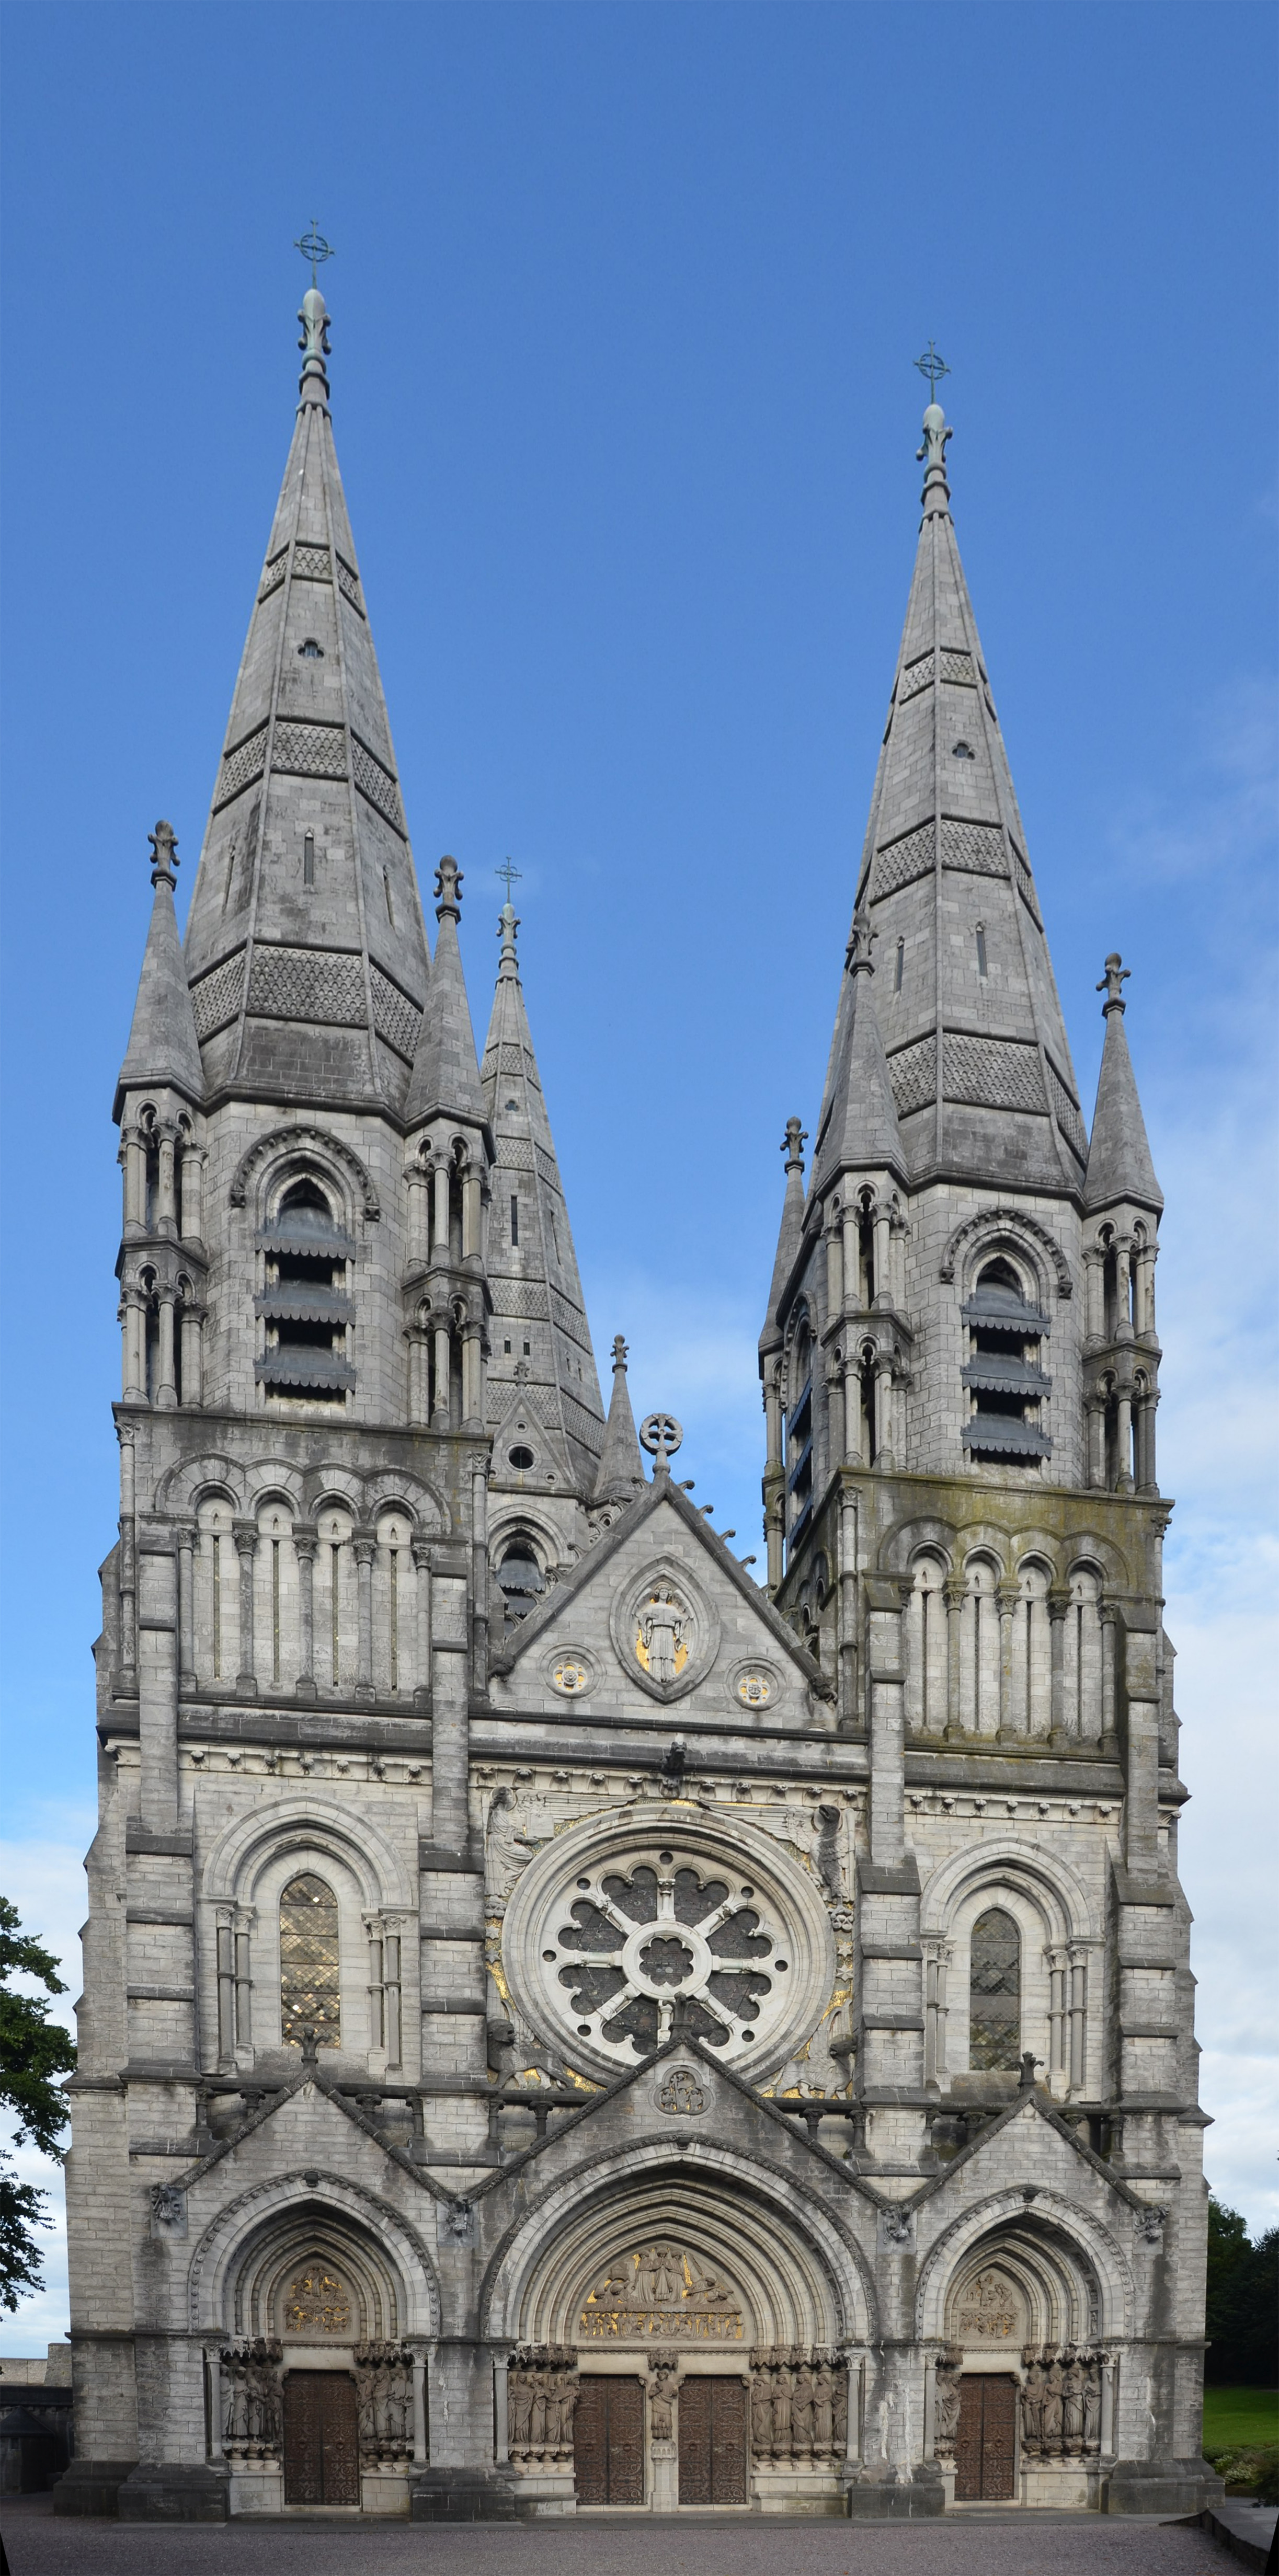 Saint Fin Barre's Cathedral - Wikipedia